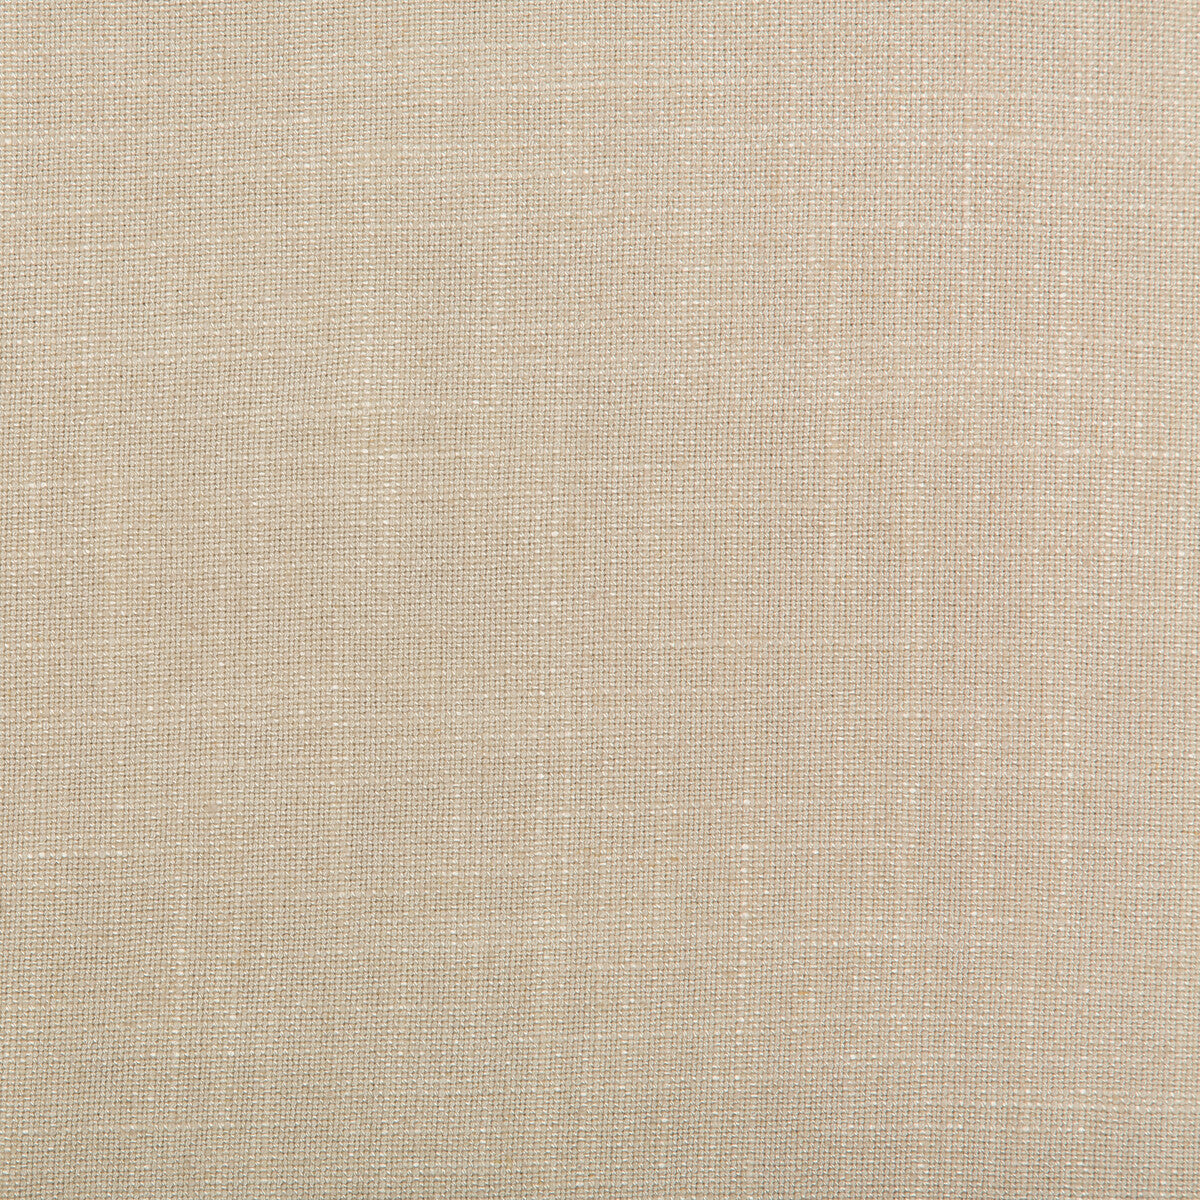 Aura fabric in dew color - pattern 35520.1617.0 - by Kravet Design